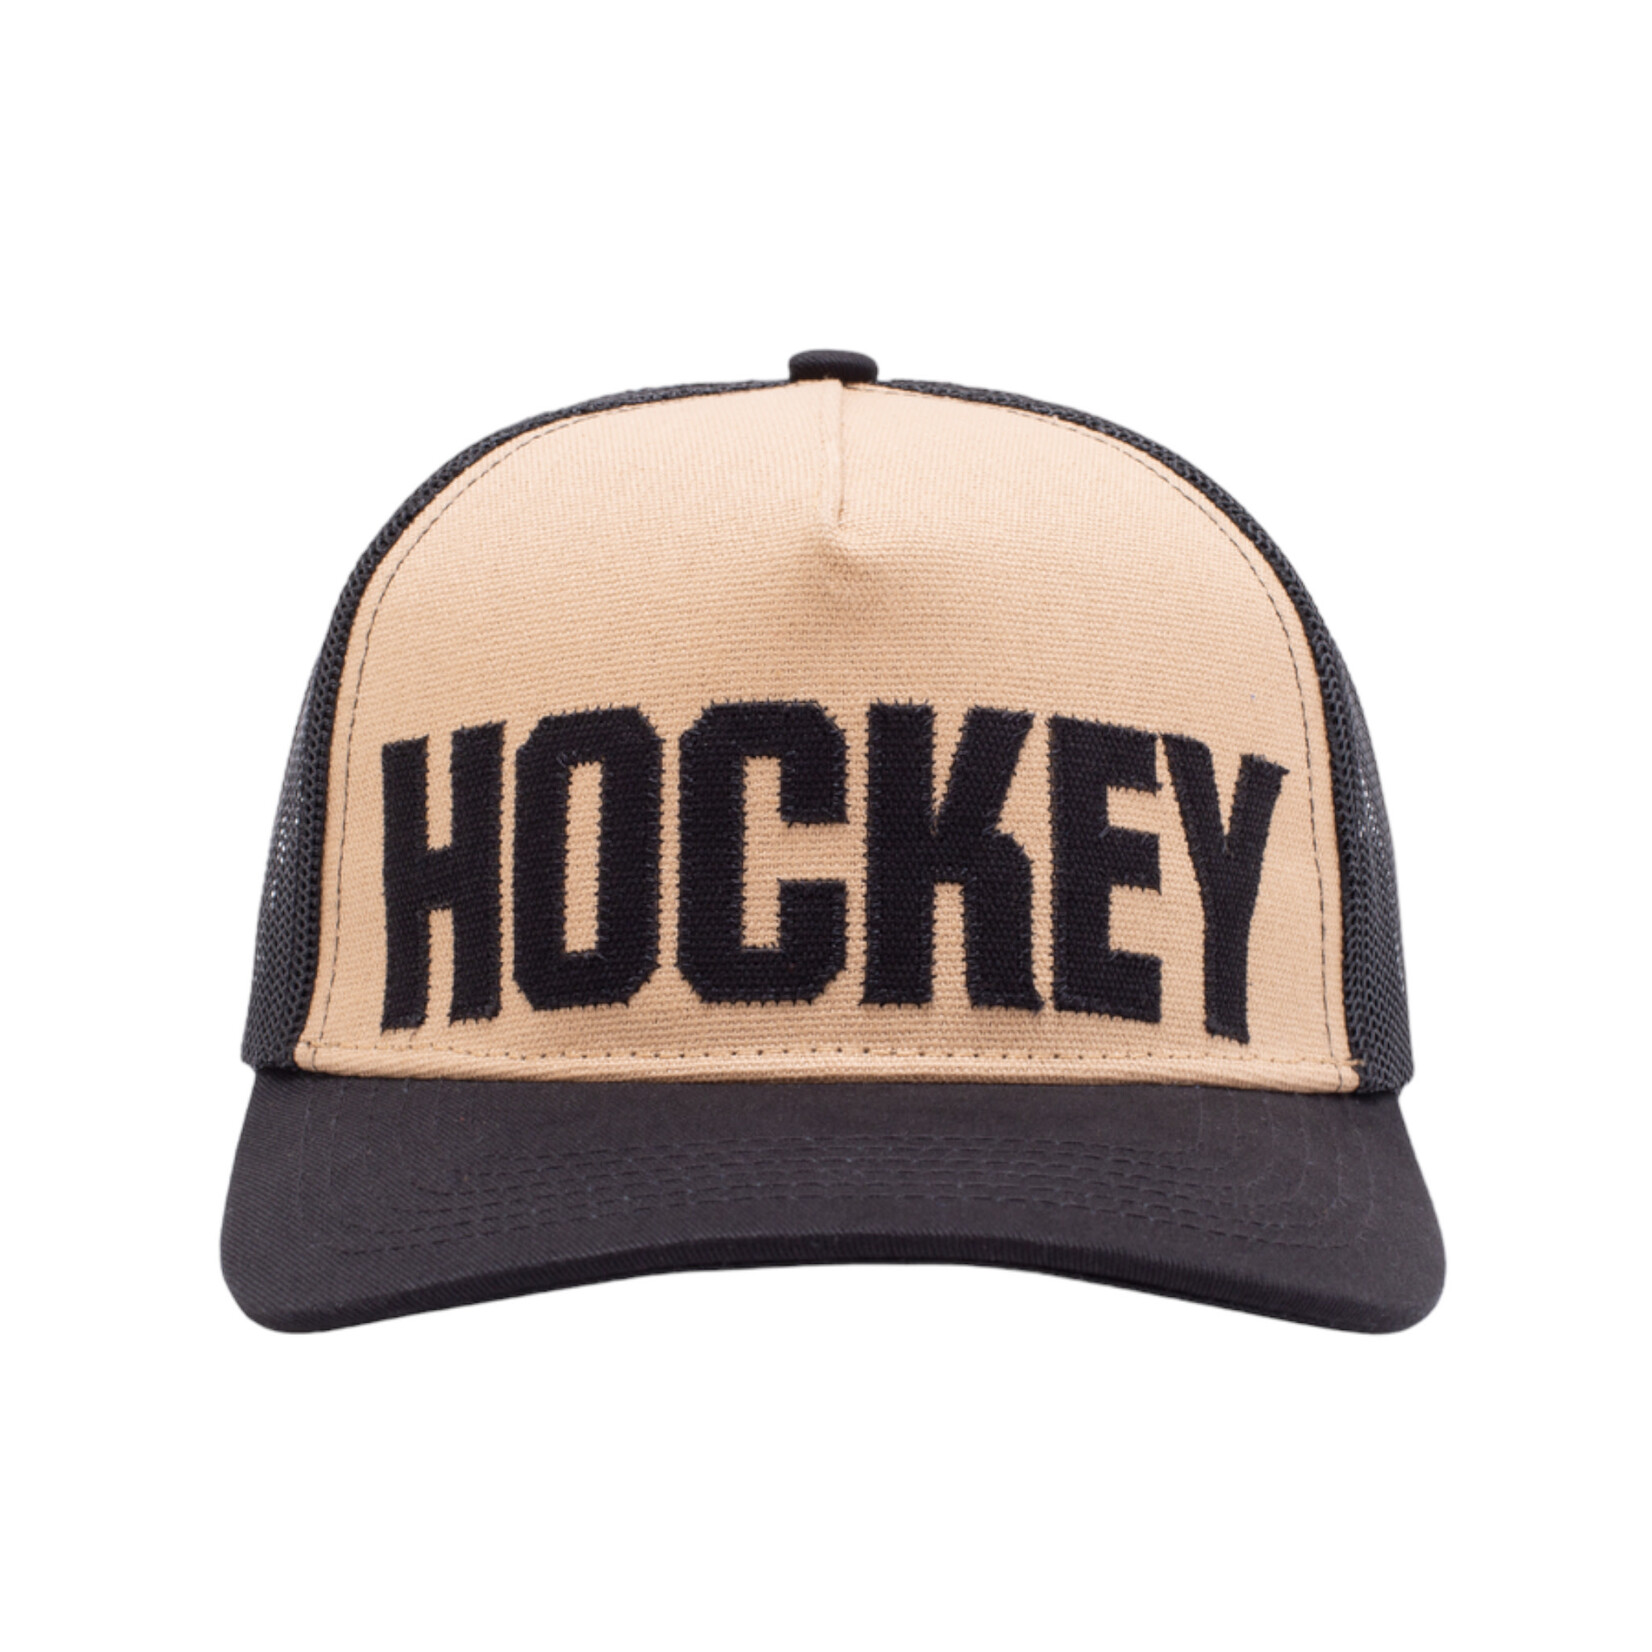 Hockey Skateboards Hockey Truck Stop Hat Black/Cream